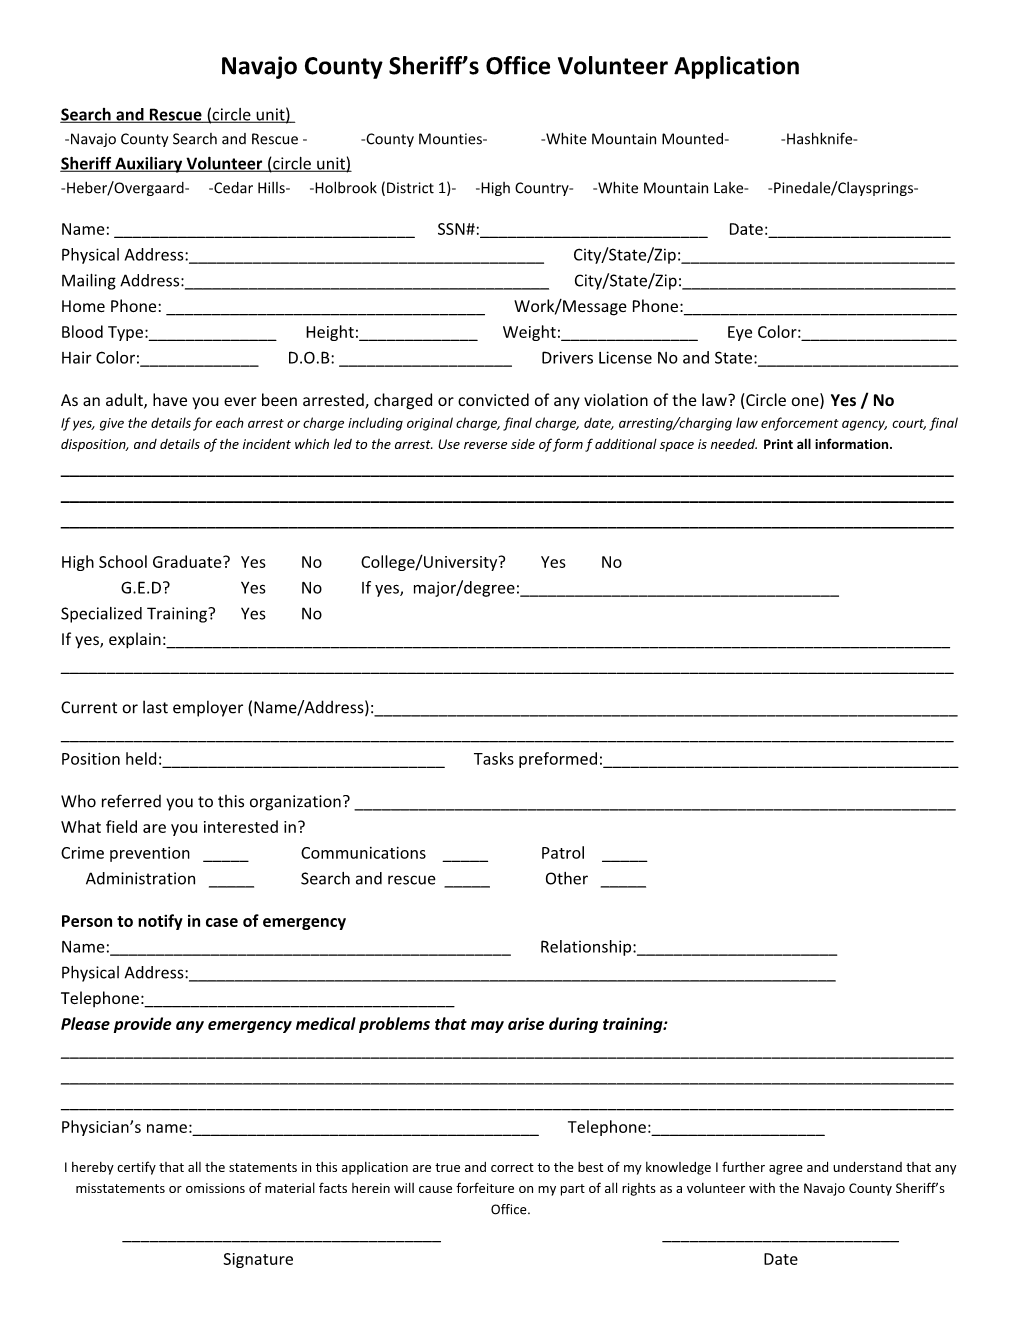 Navajo County Sheriff S Office Volunteer Application